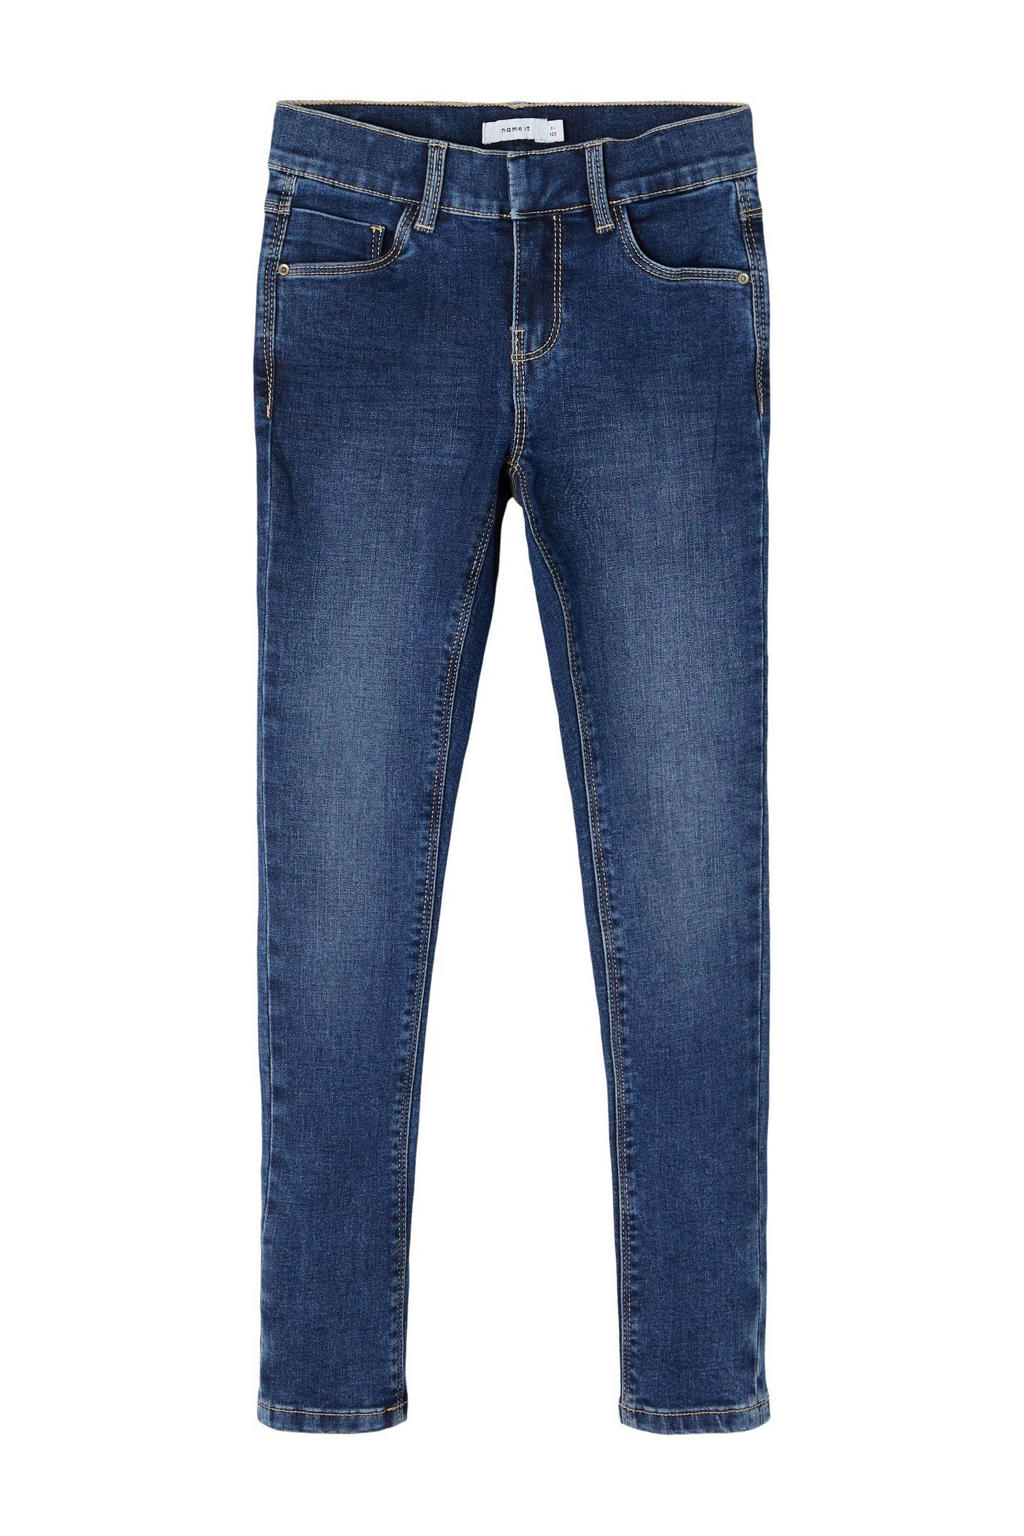 NAME IT KIDS skinny jeans NKFPOLLY met biologisch katoen dark denim